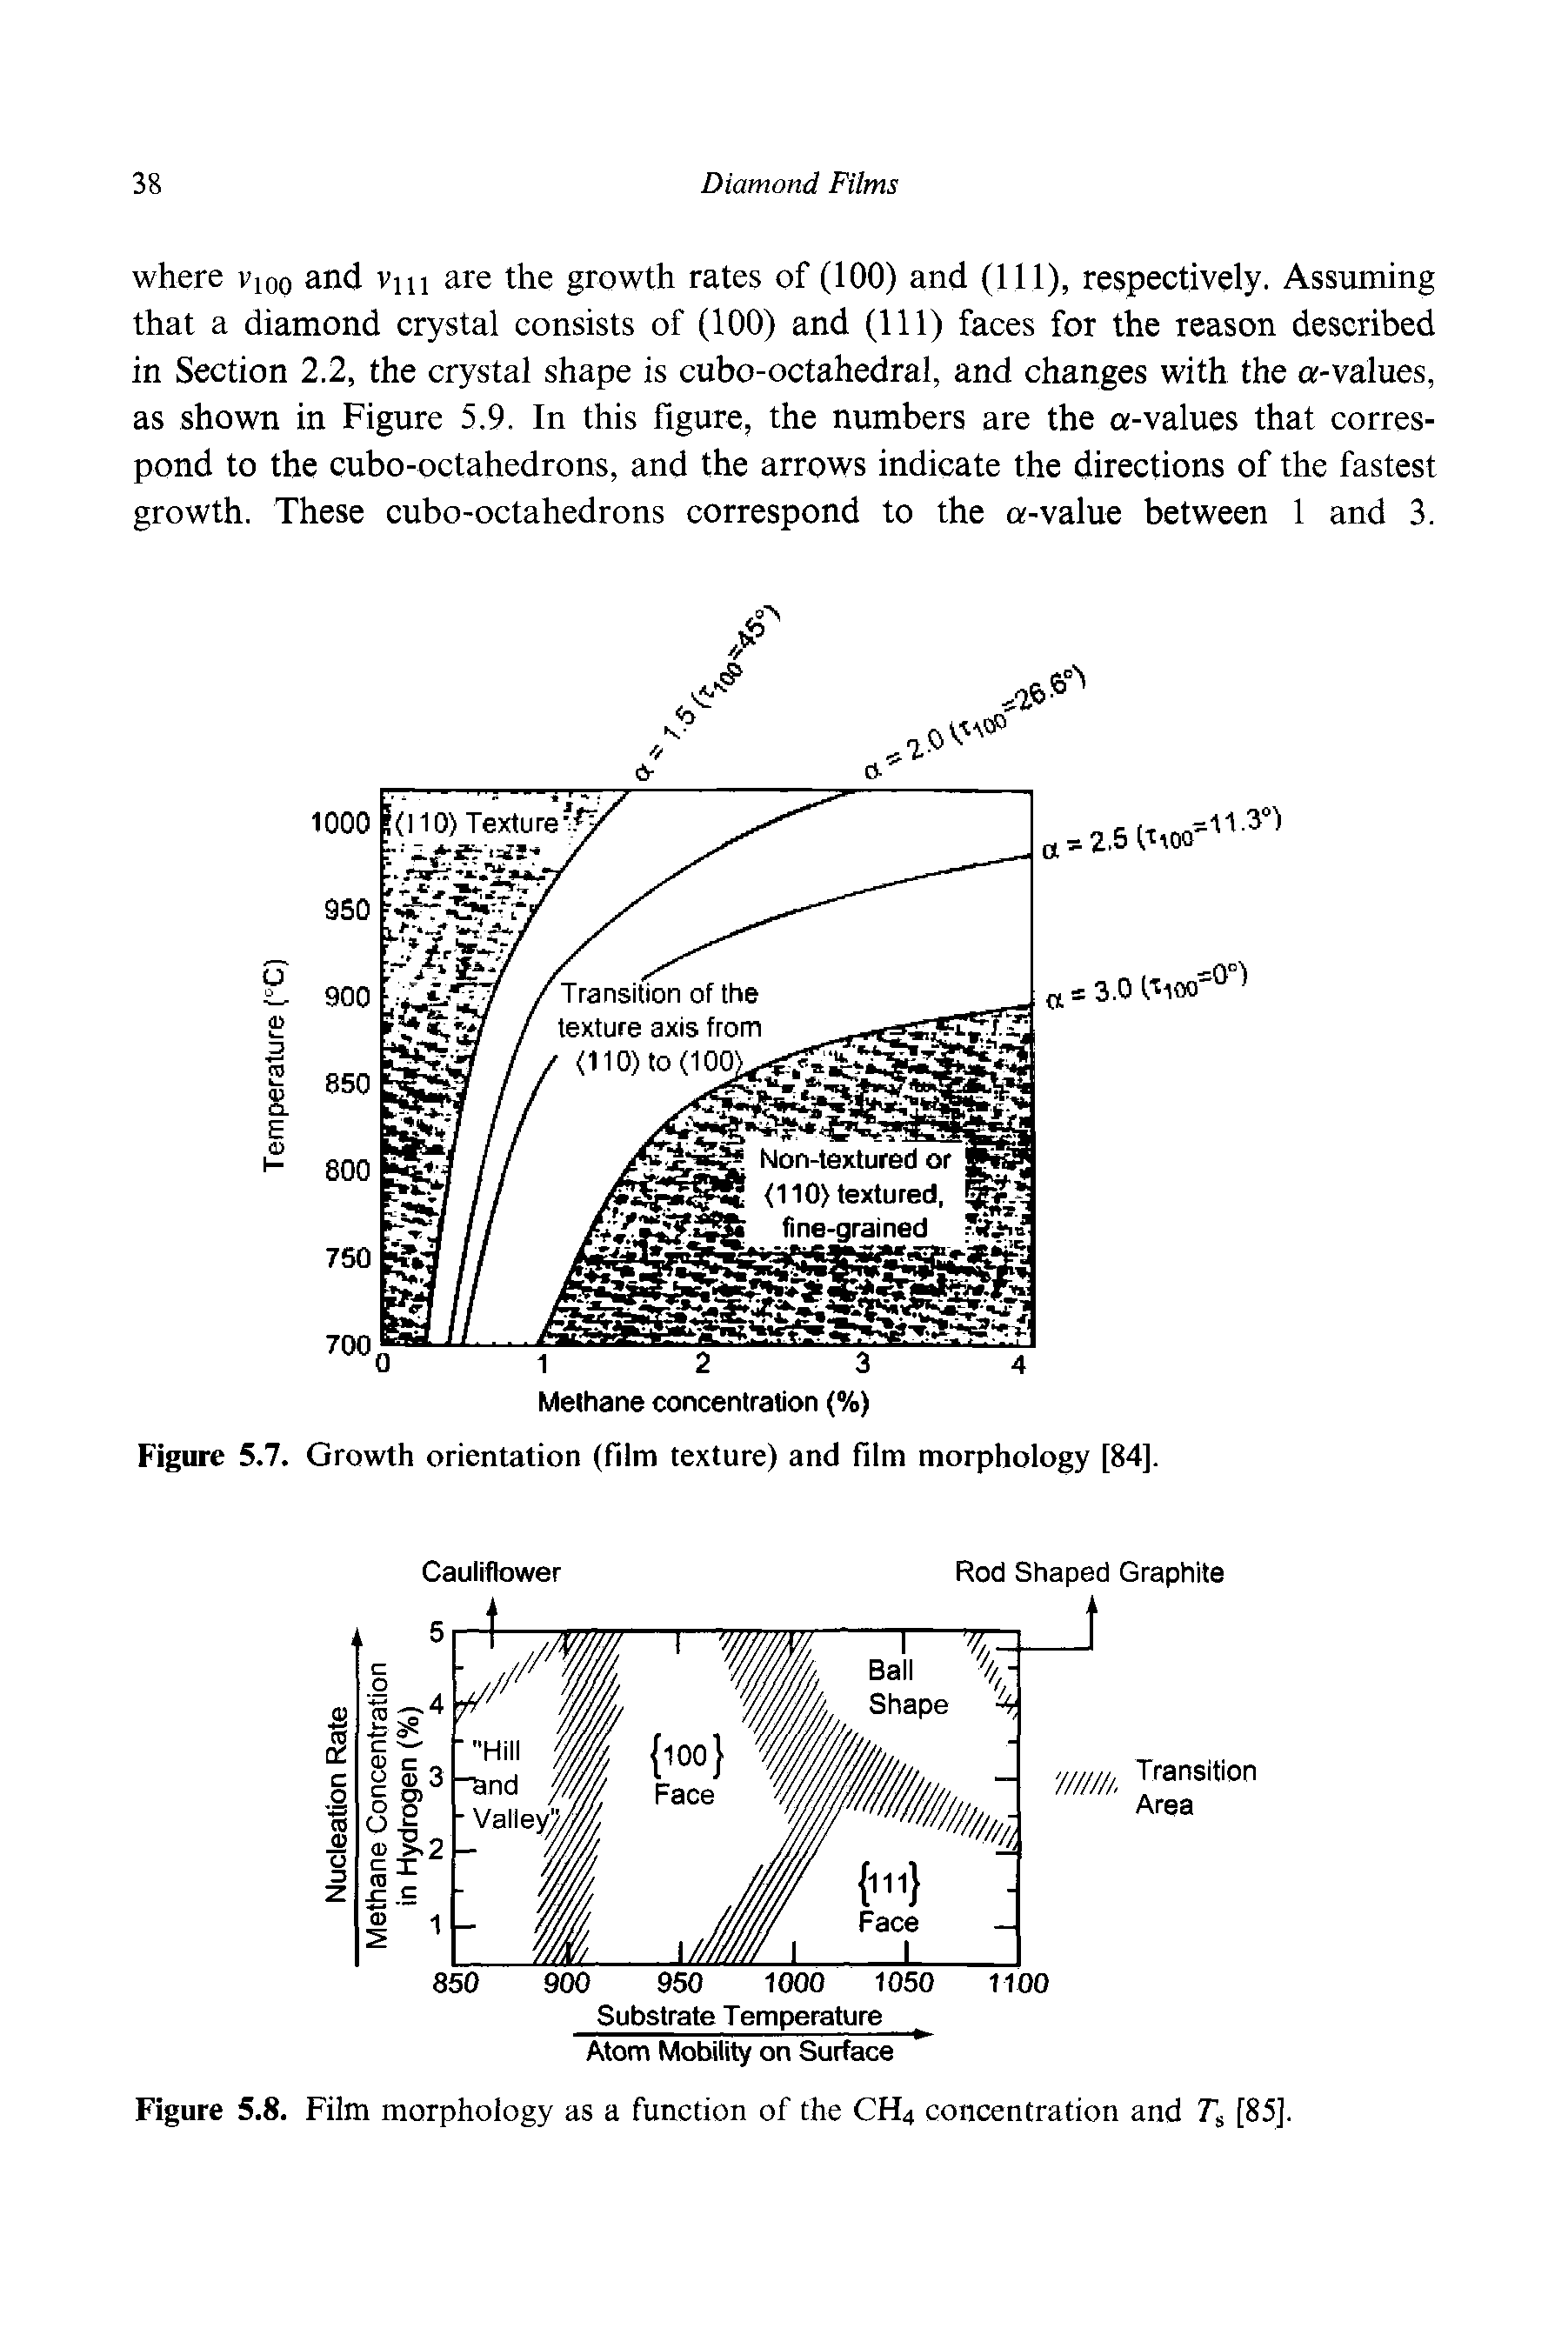 Figure 5.7. Growth orientation (film texture) and film morphology [84].